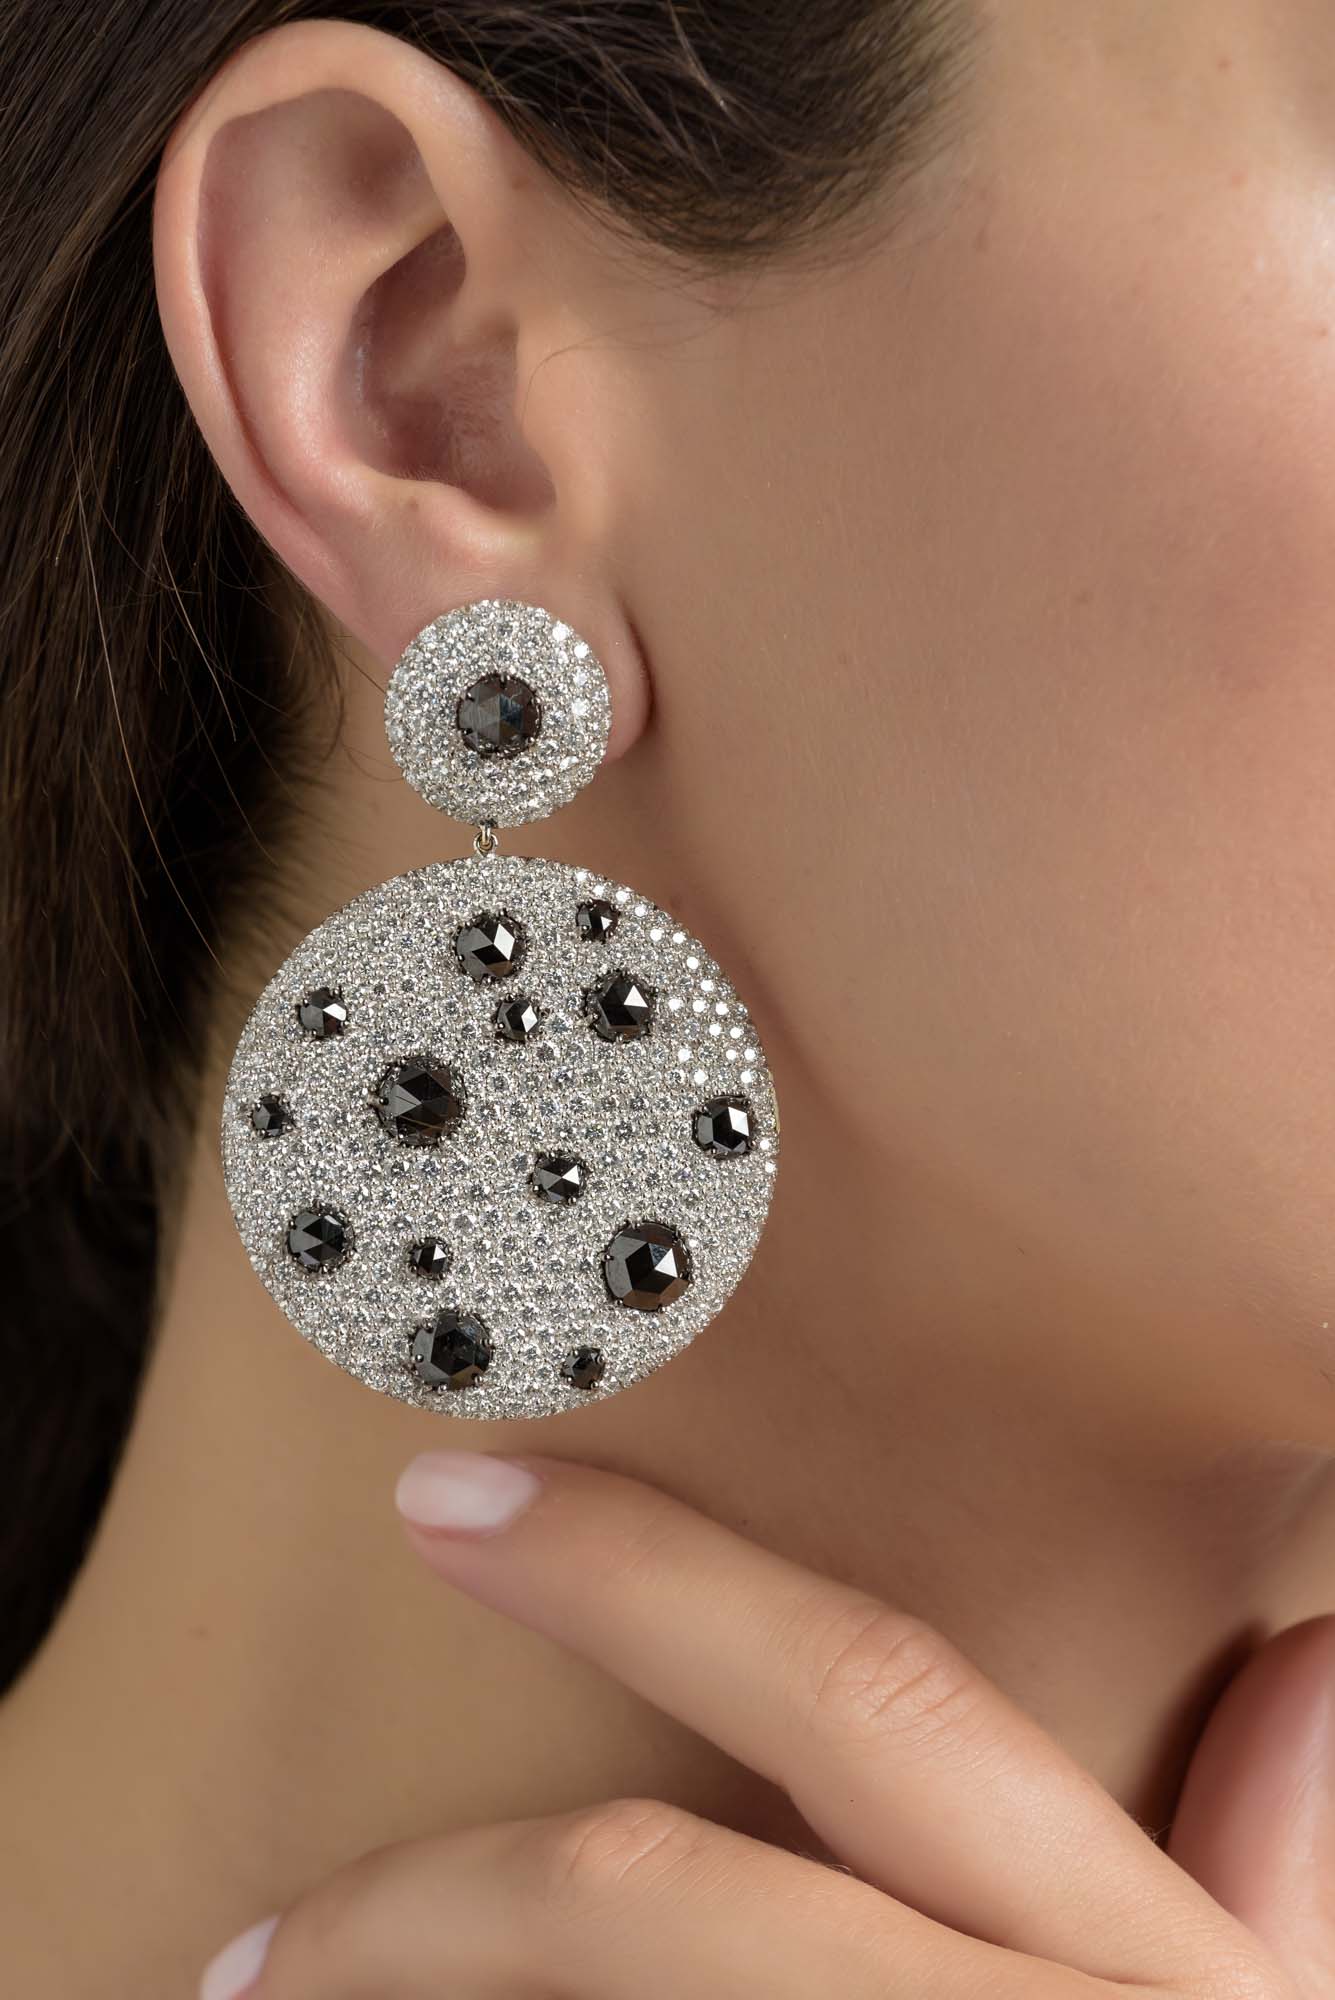 Vintage Earrings Pearl Earrings 18kt Gold Swarovski Crystals Pierced or Screw Back Clip Earrings #E359 | PVD Vintage Jewelry Pearl